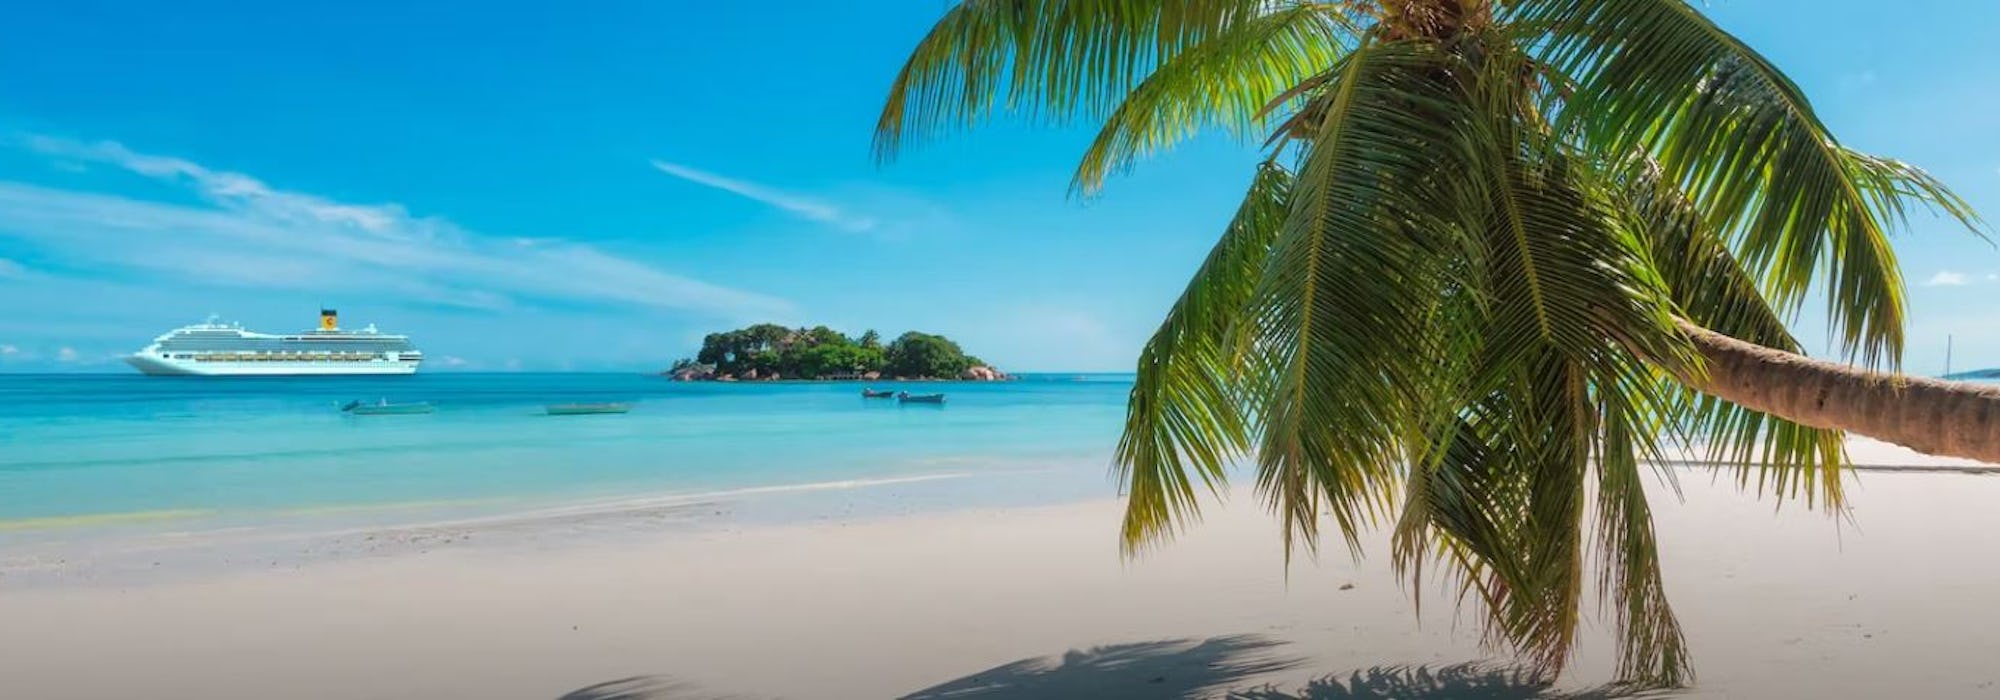 Costa Cruises - Caribbean